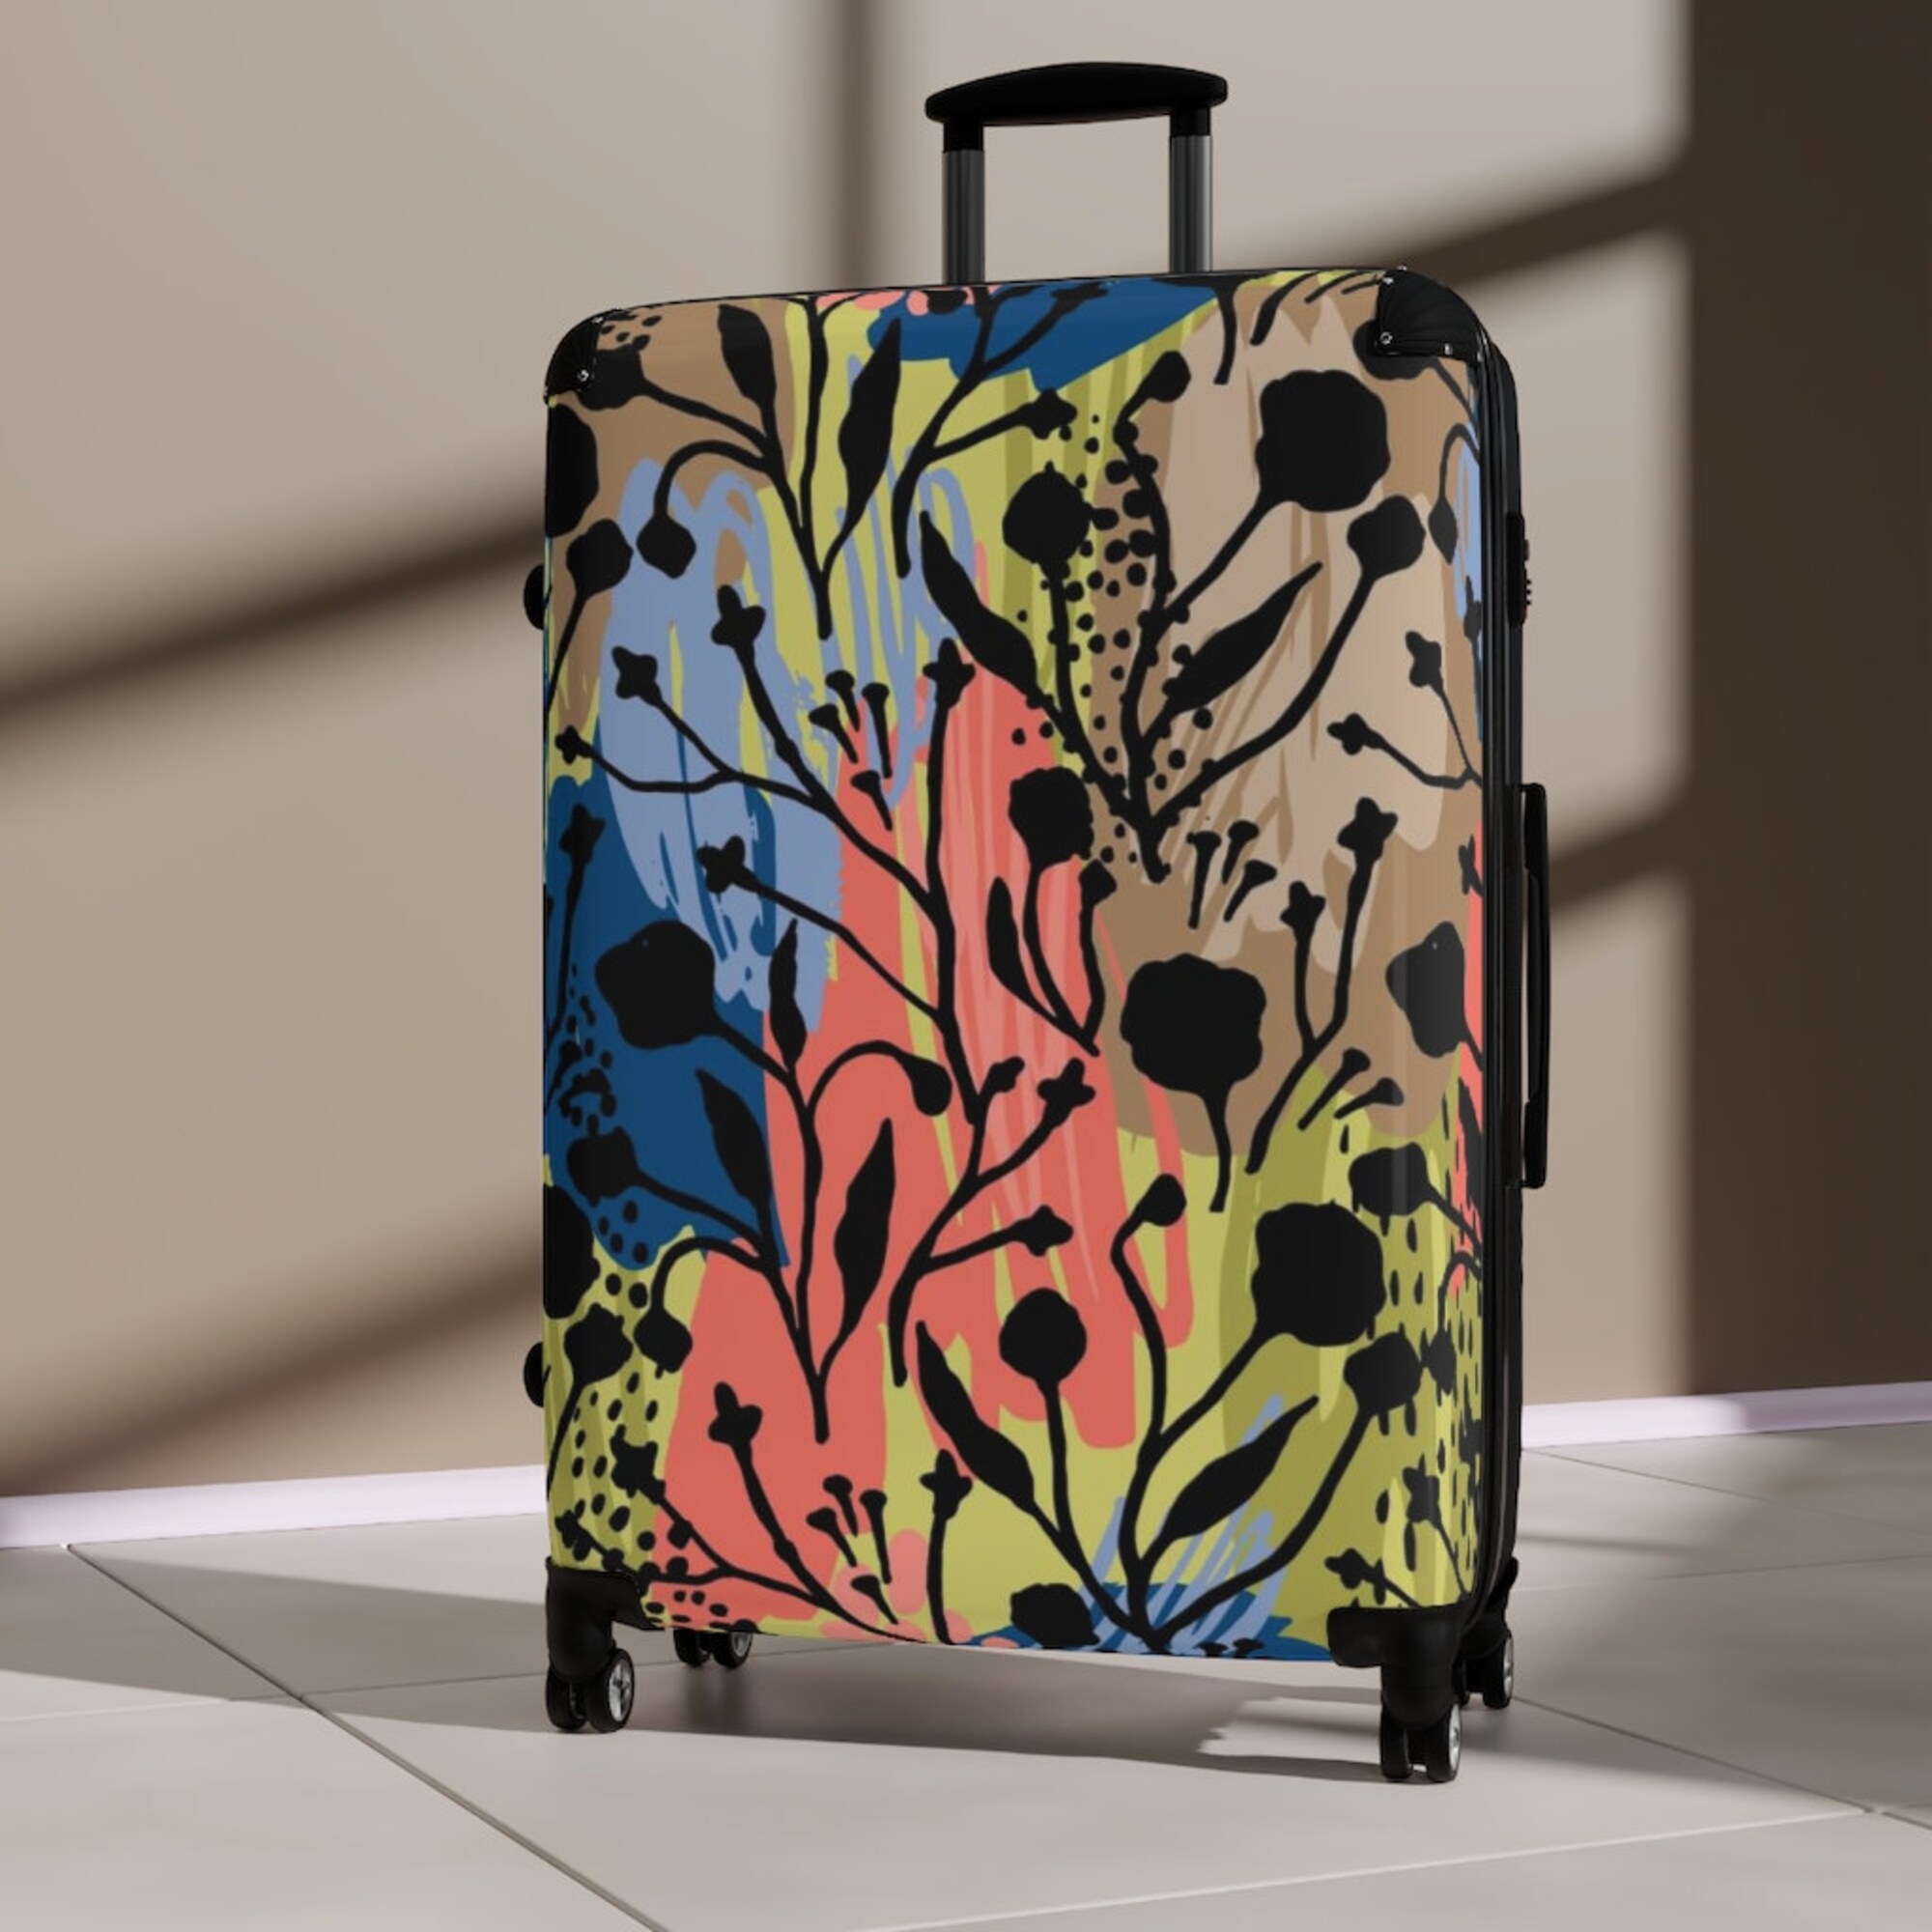 The Dahlia Suitcase